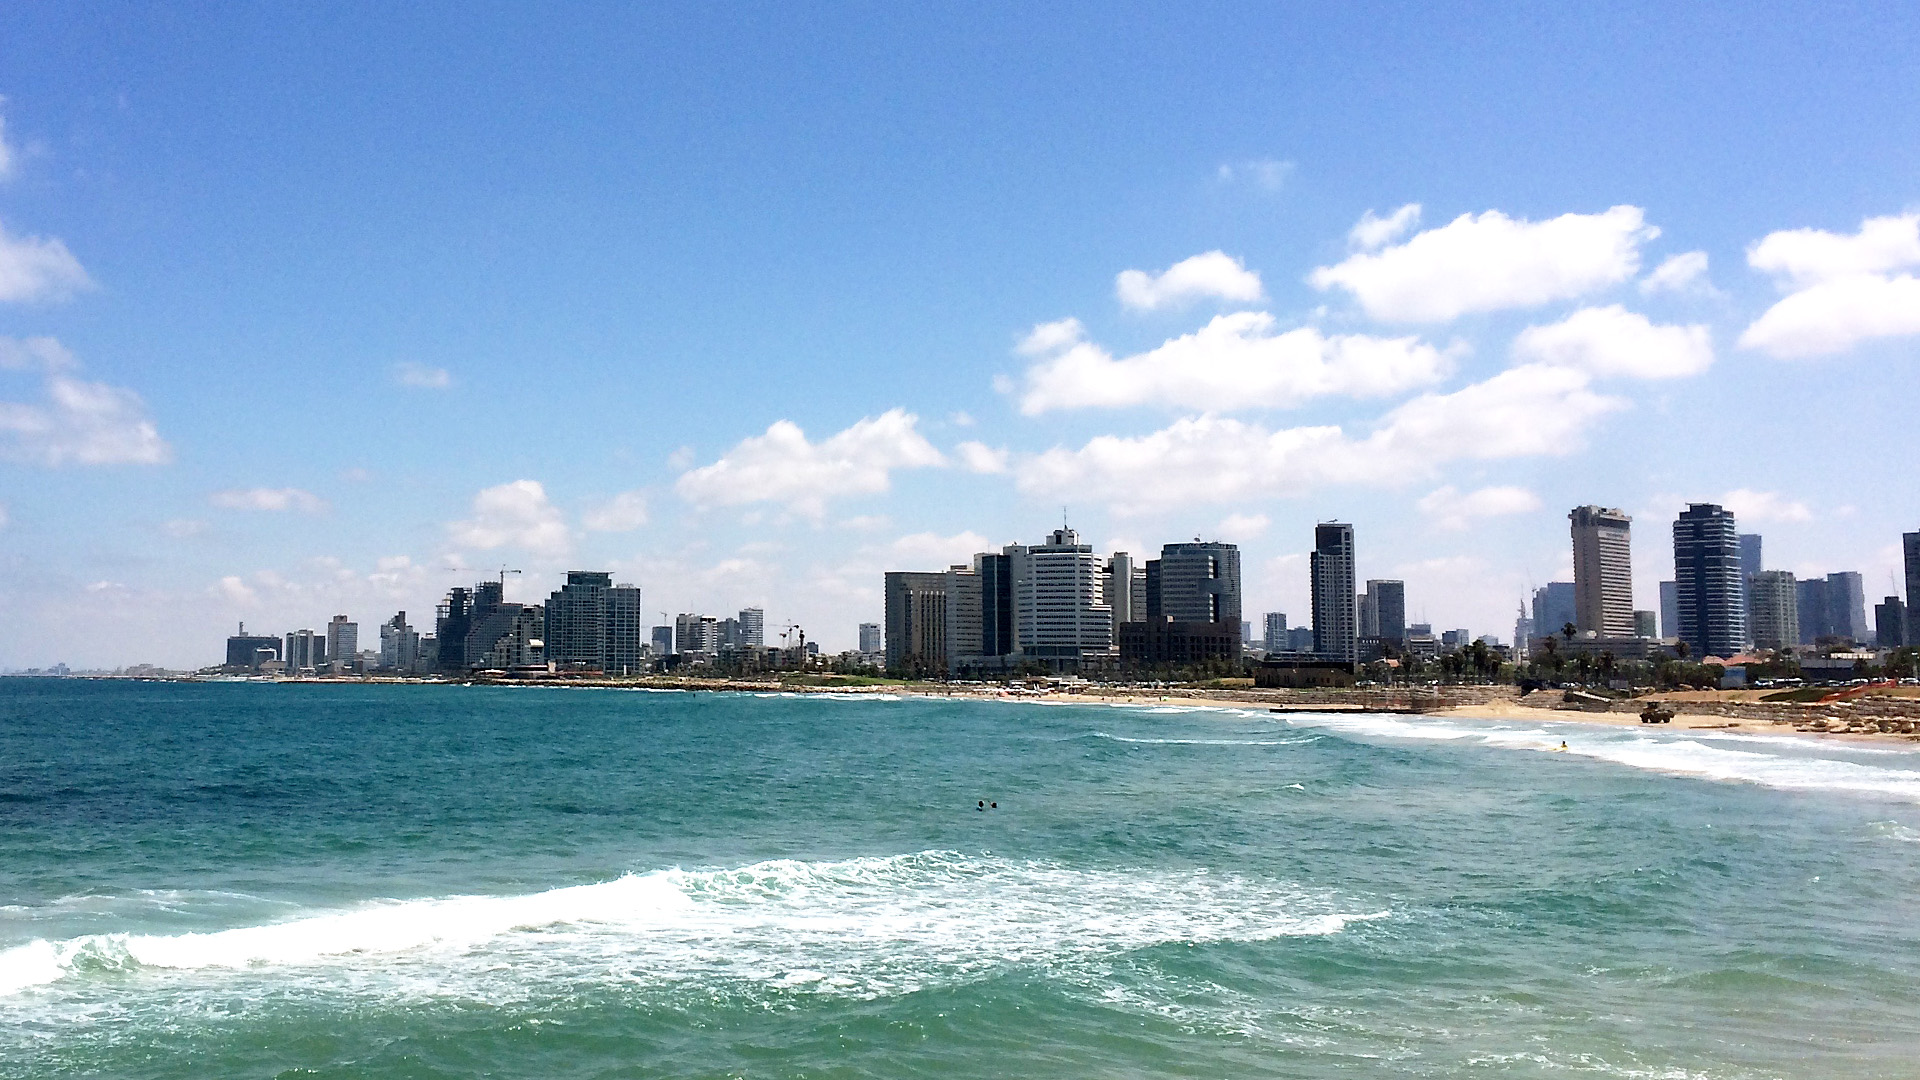 The Life-Sized City - E5 - Tel Aviv